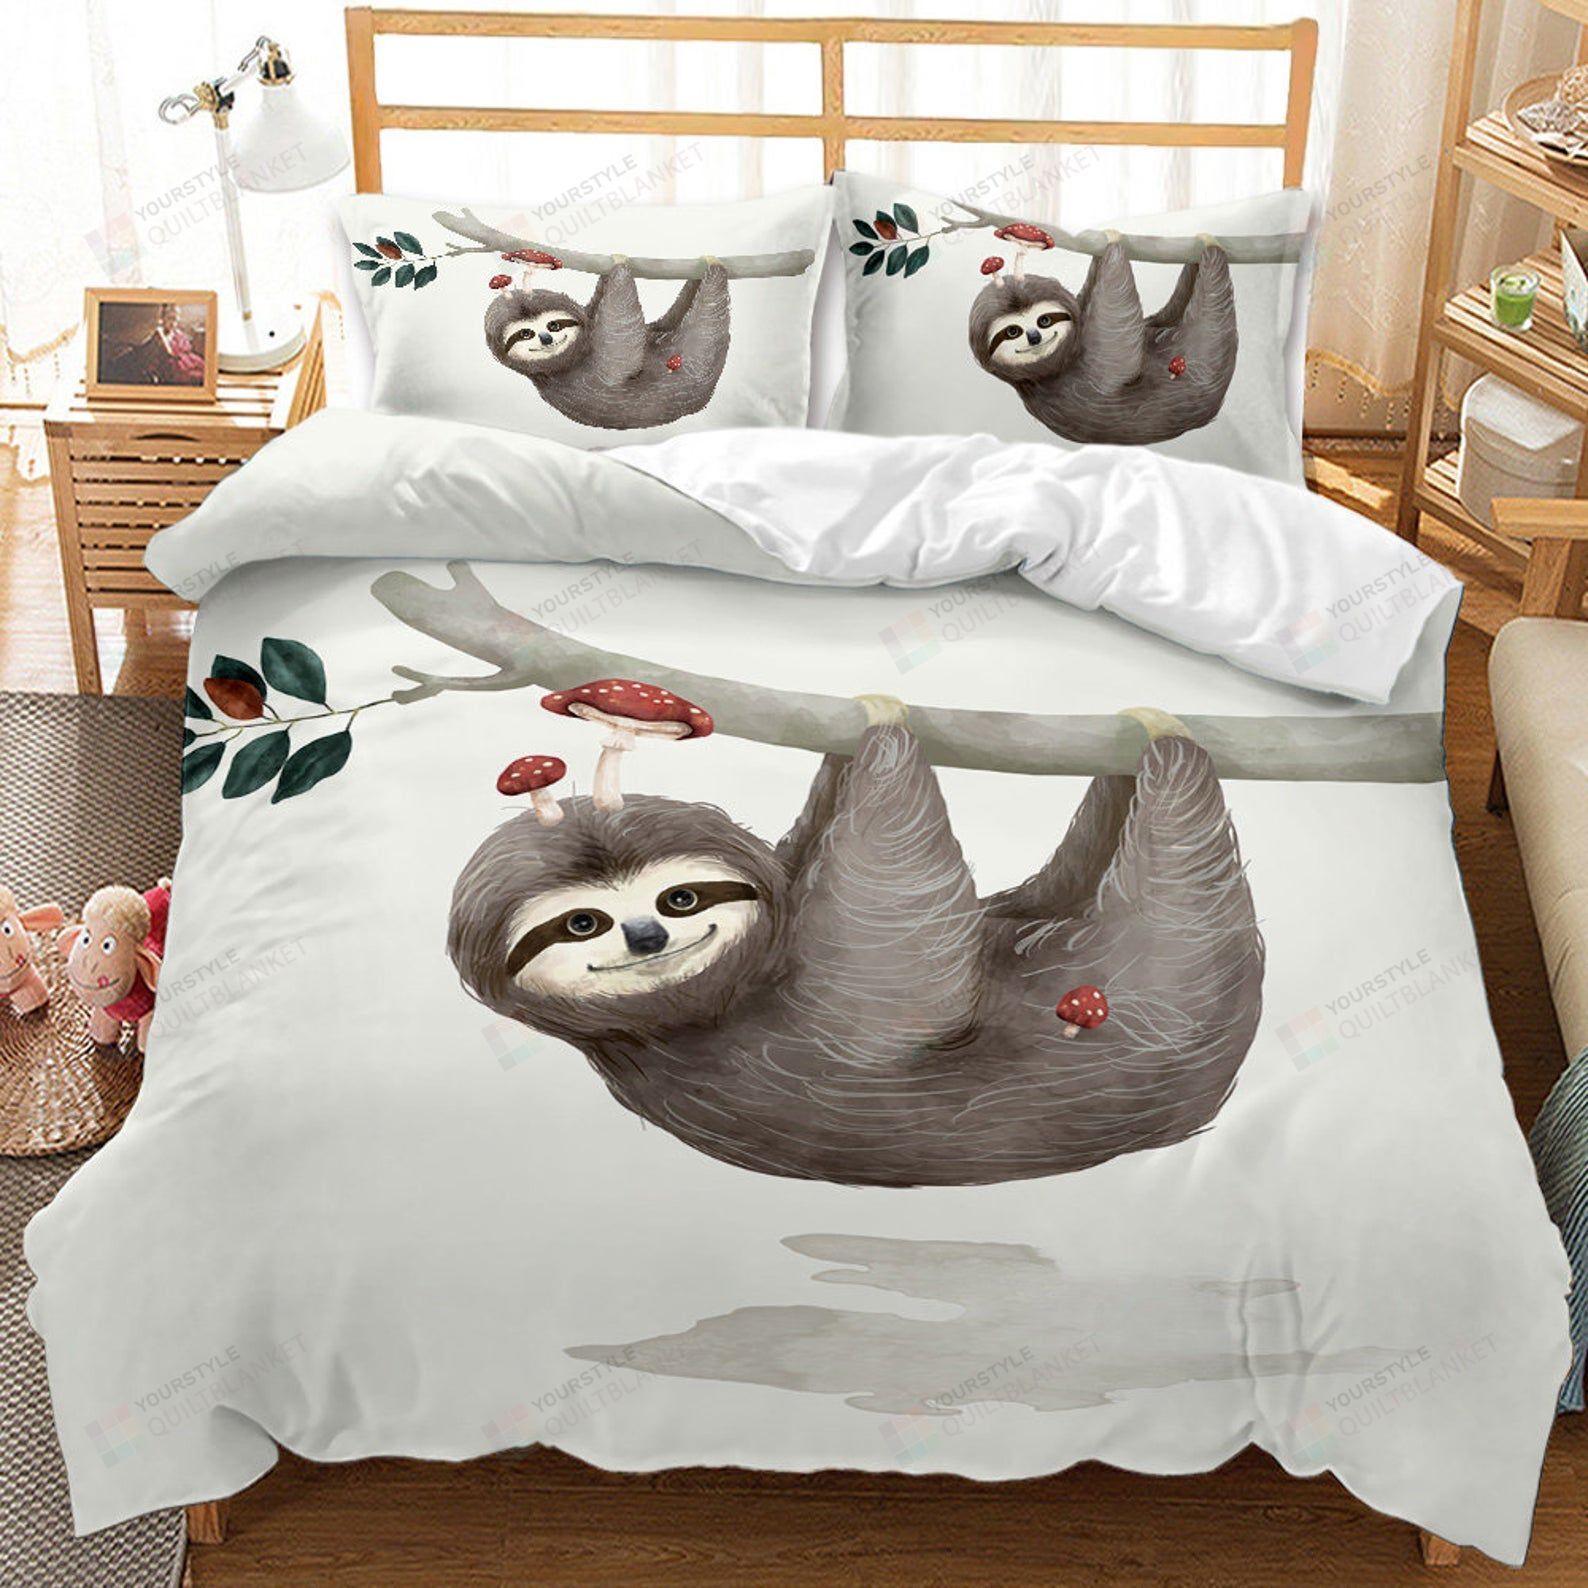 Cartoon Sloth Bed Sheets Duvet Cover Bedding Sets